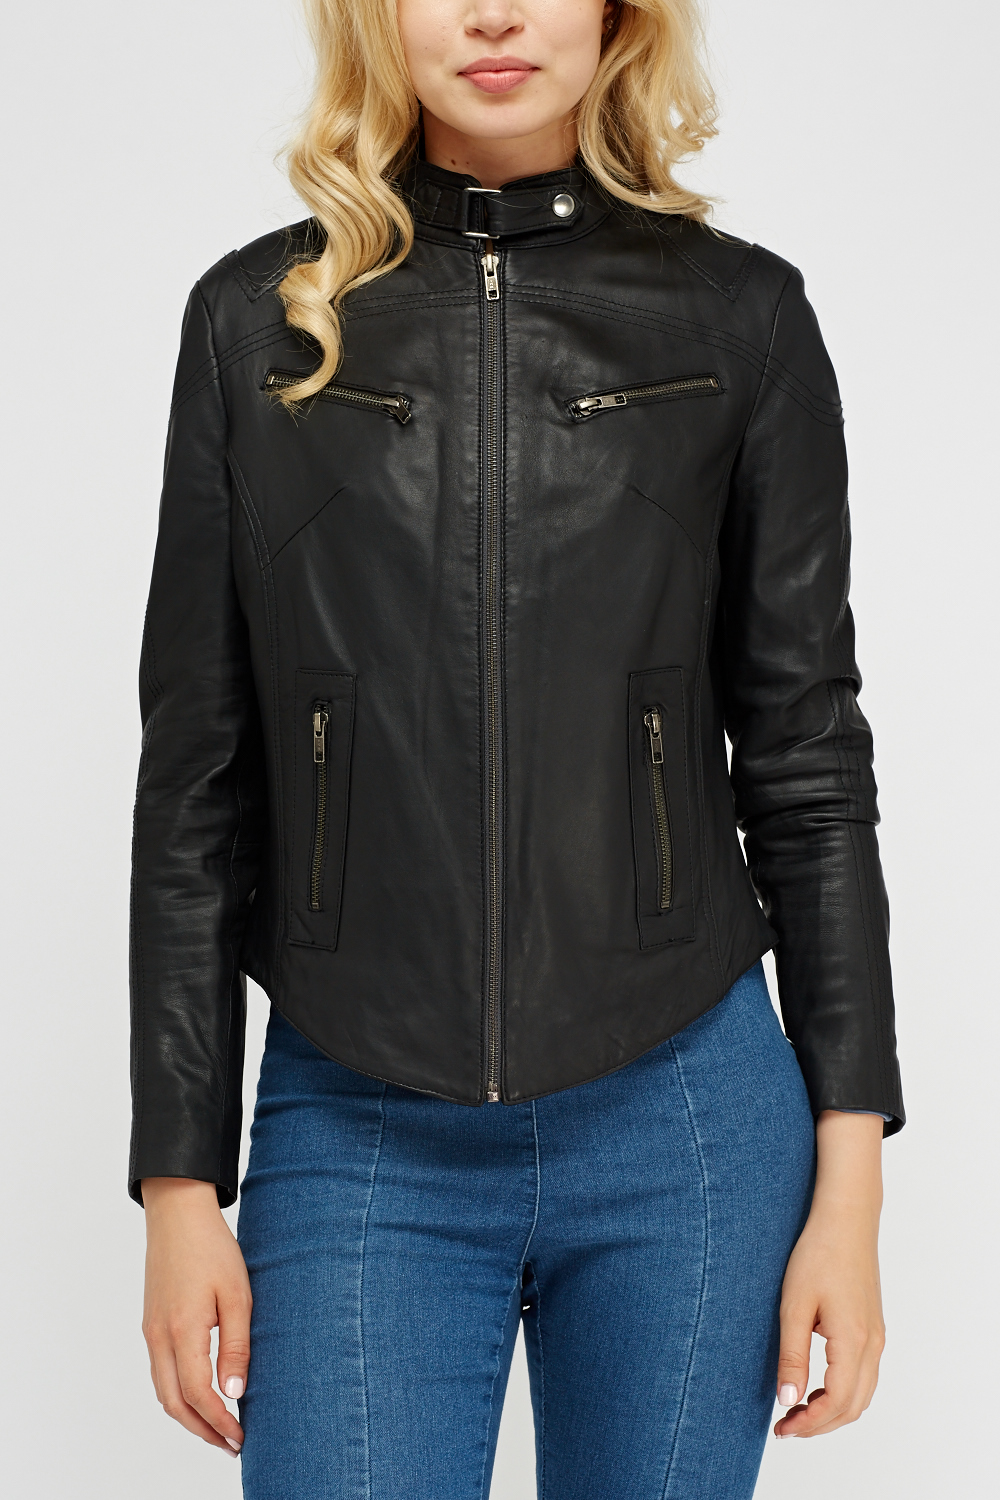 Heeli Leather Biker Jacket - Limited edition | Discount Designer Stock